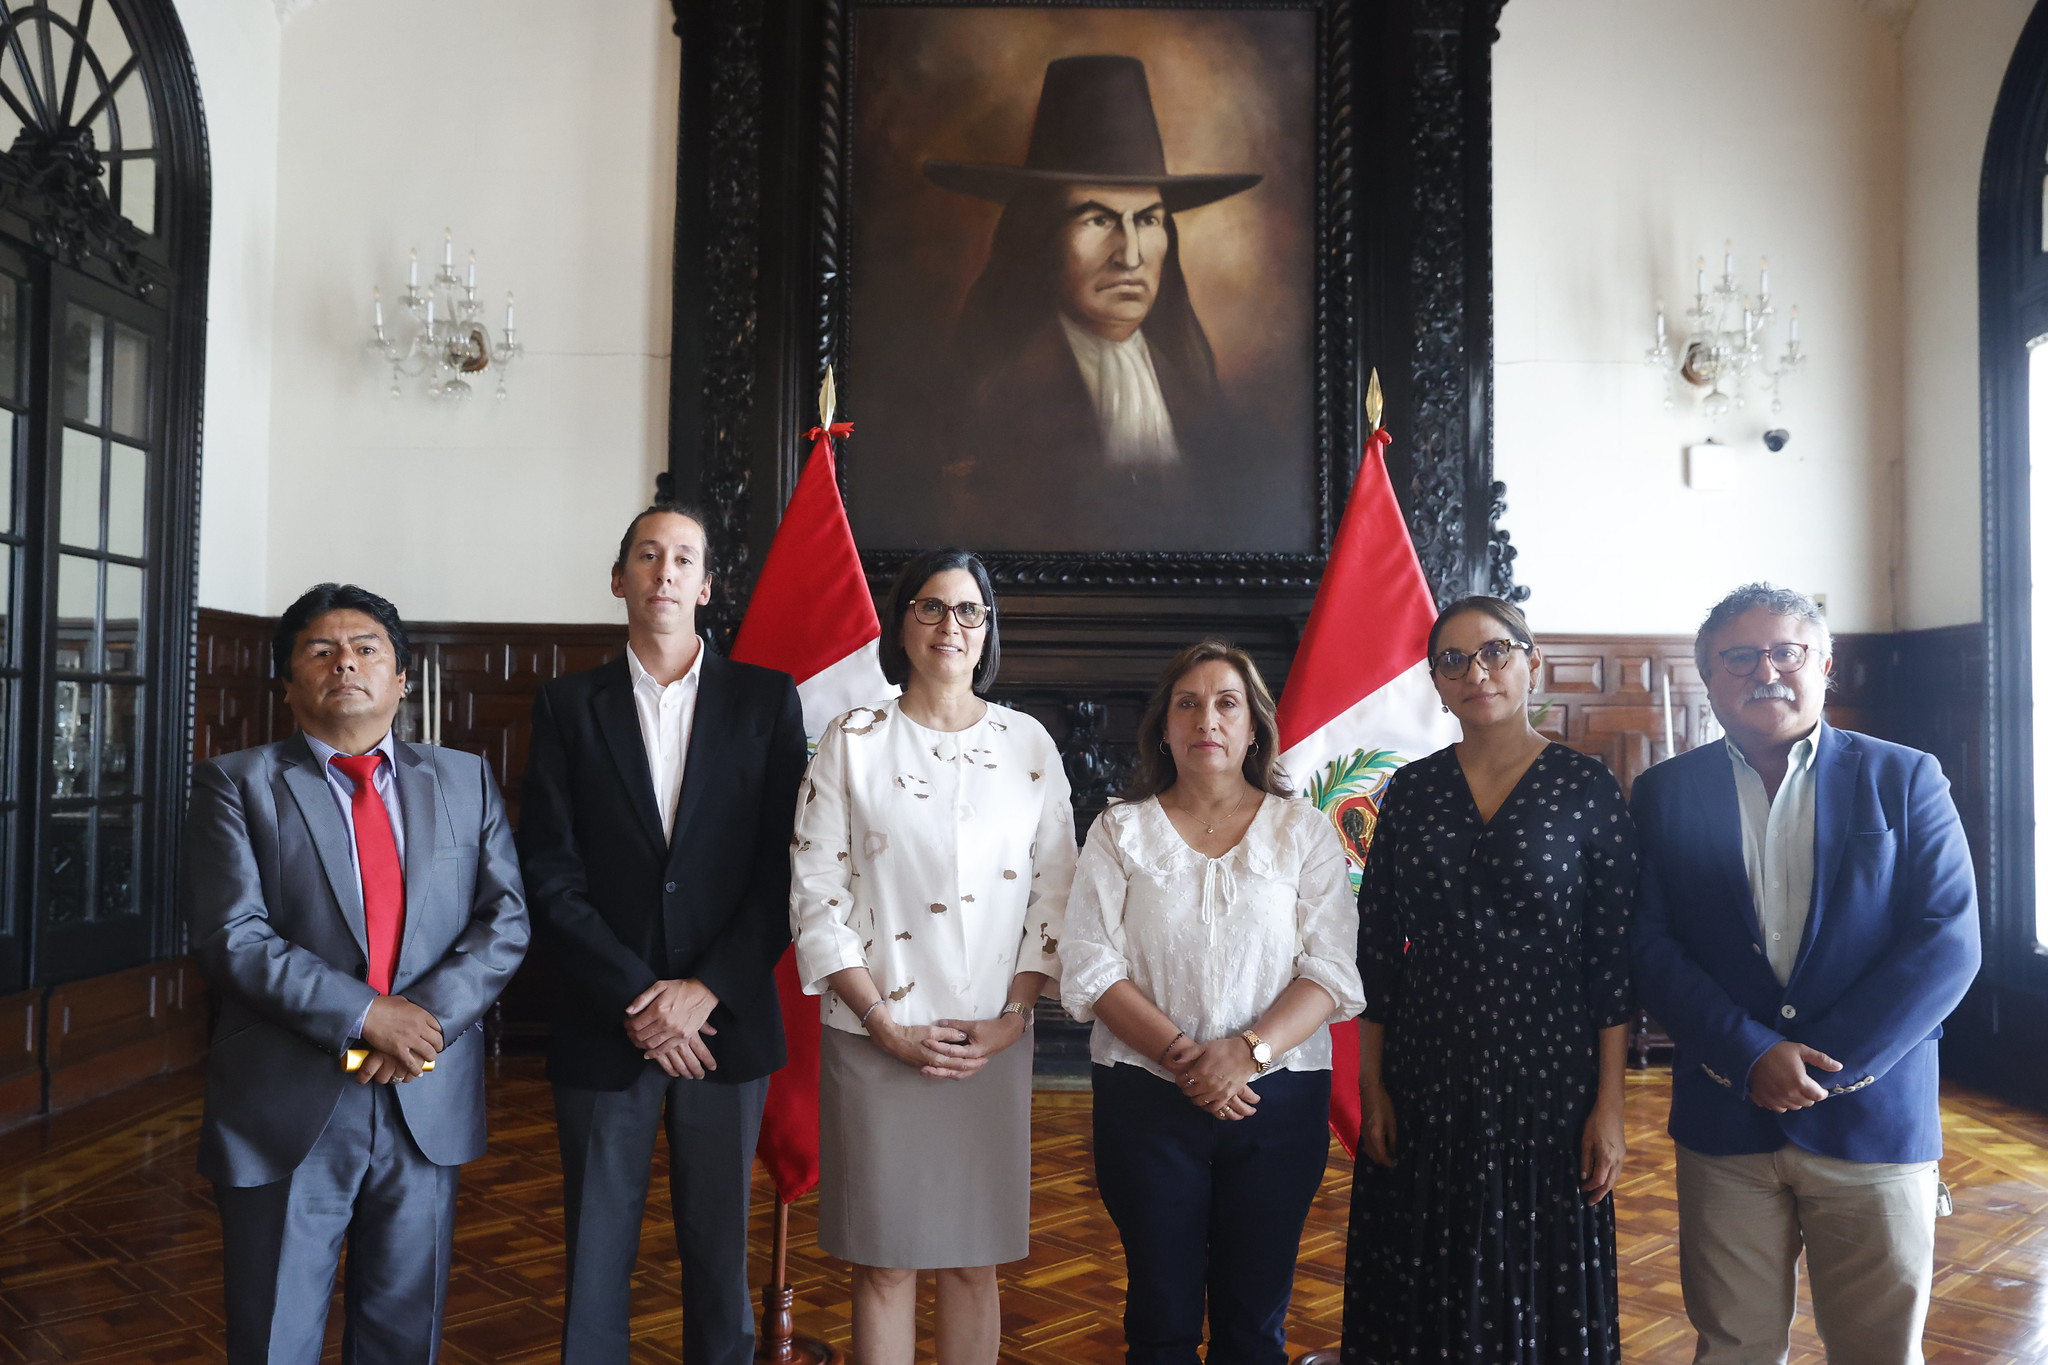 Presidenta Boluarte garantiza respeto a la libertad de expresión y plena transparencia, en reunión con la prensa